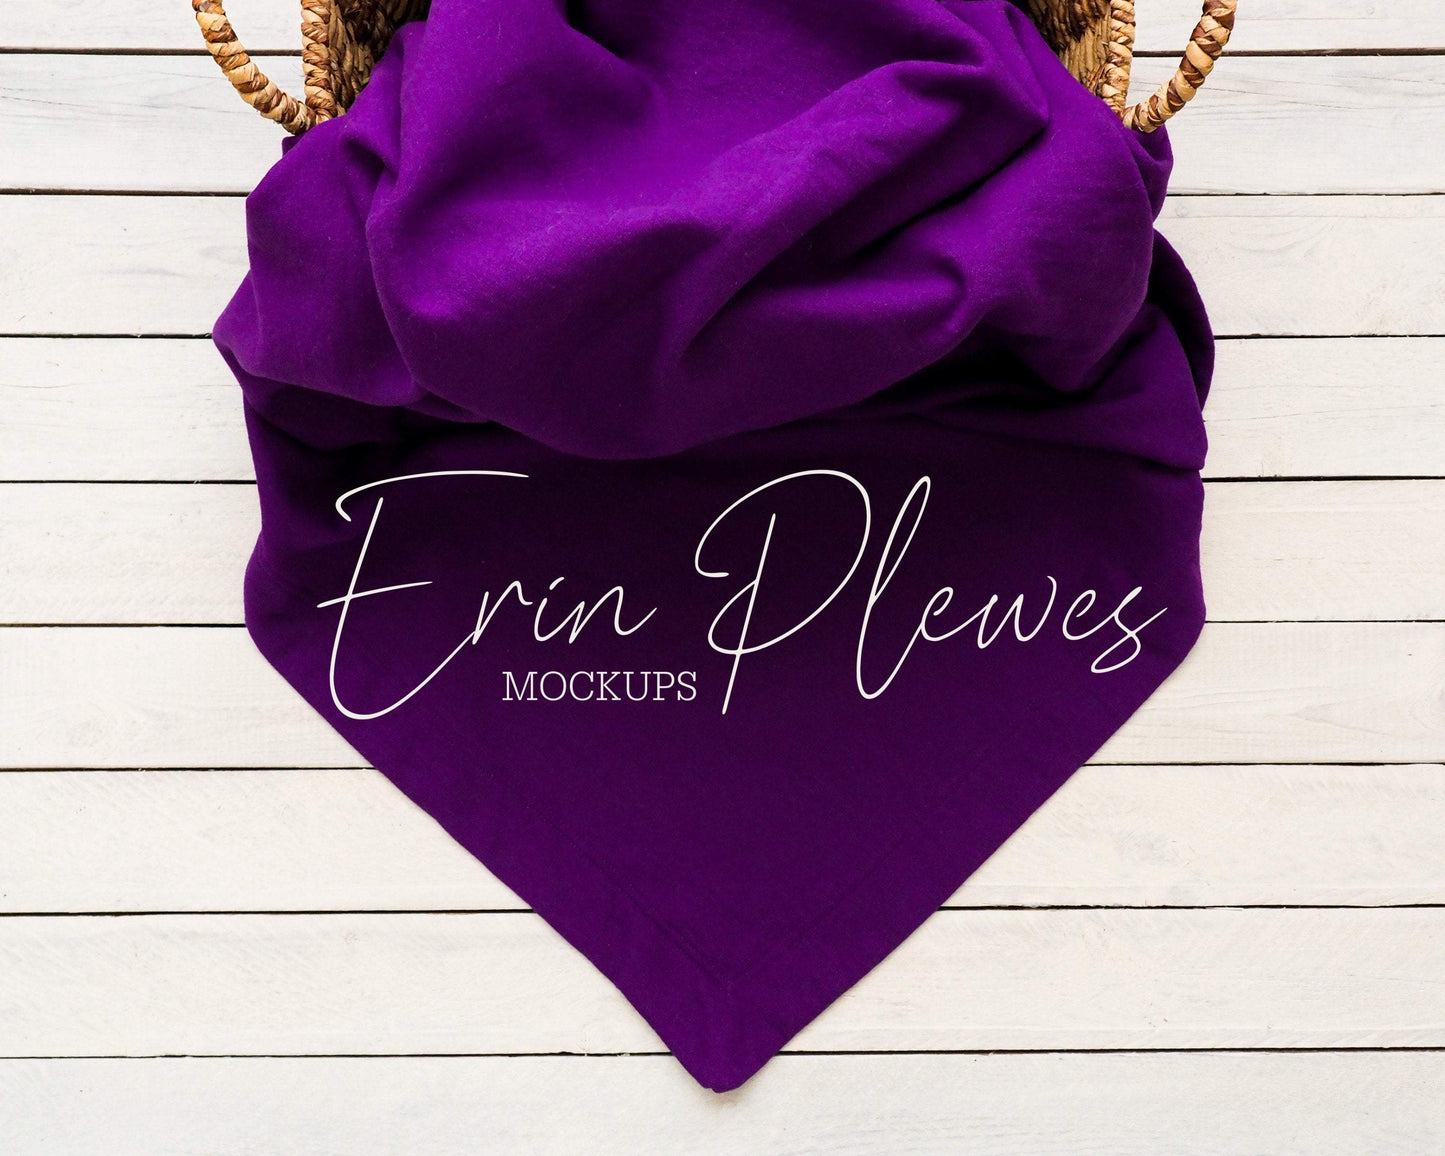 Erin Plewes Mockups Blanket Mock Up, Gildan Purple Blanket Mockup in a Basket, Sweatshirt Blanket Lifestyle Stock Photo, Flat Lay Template Jpeg